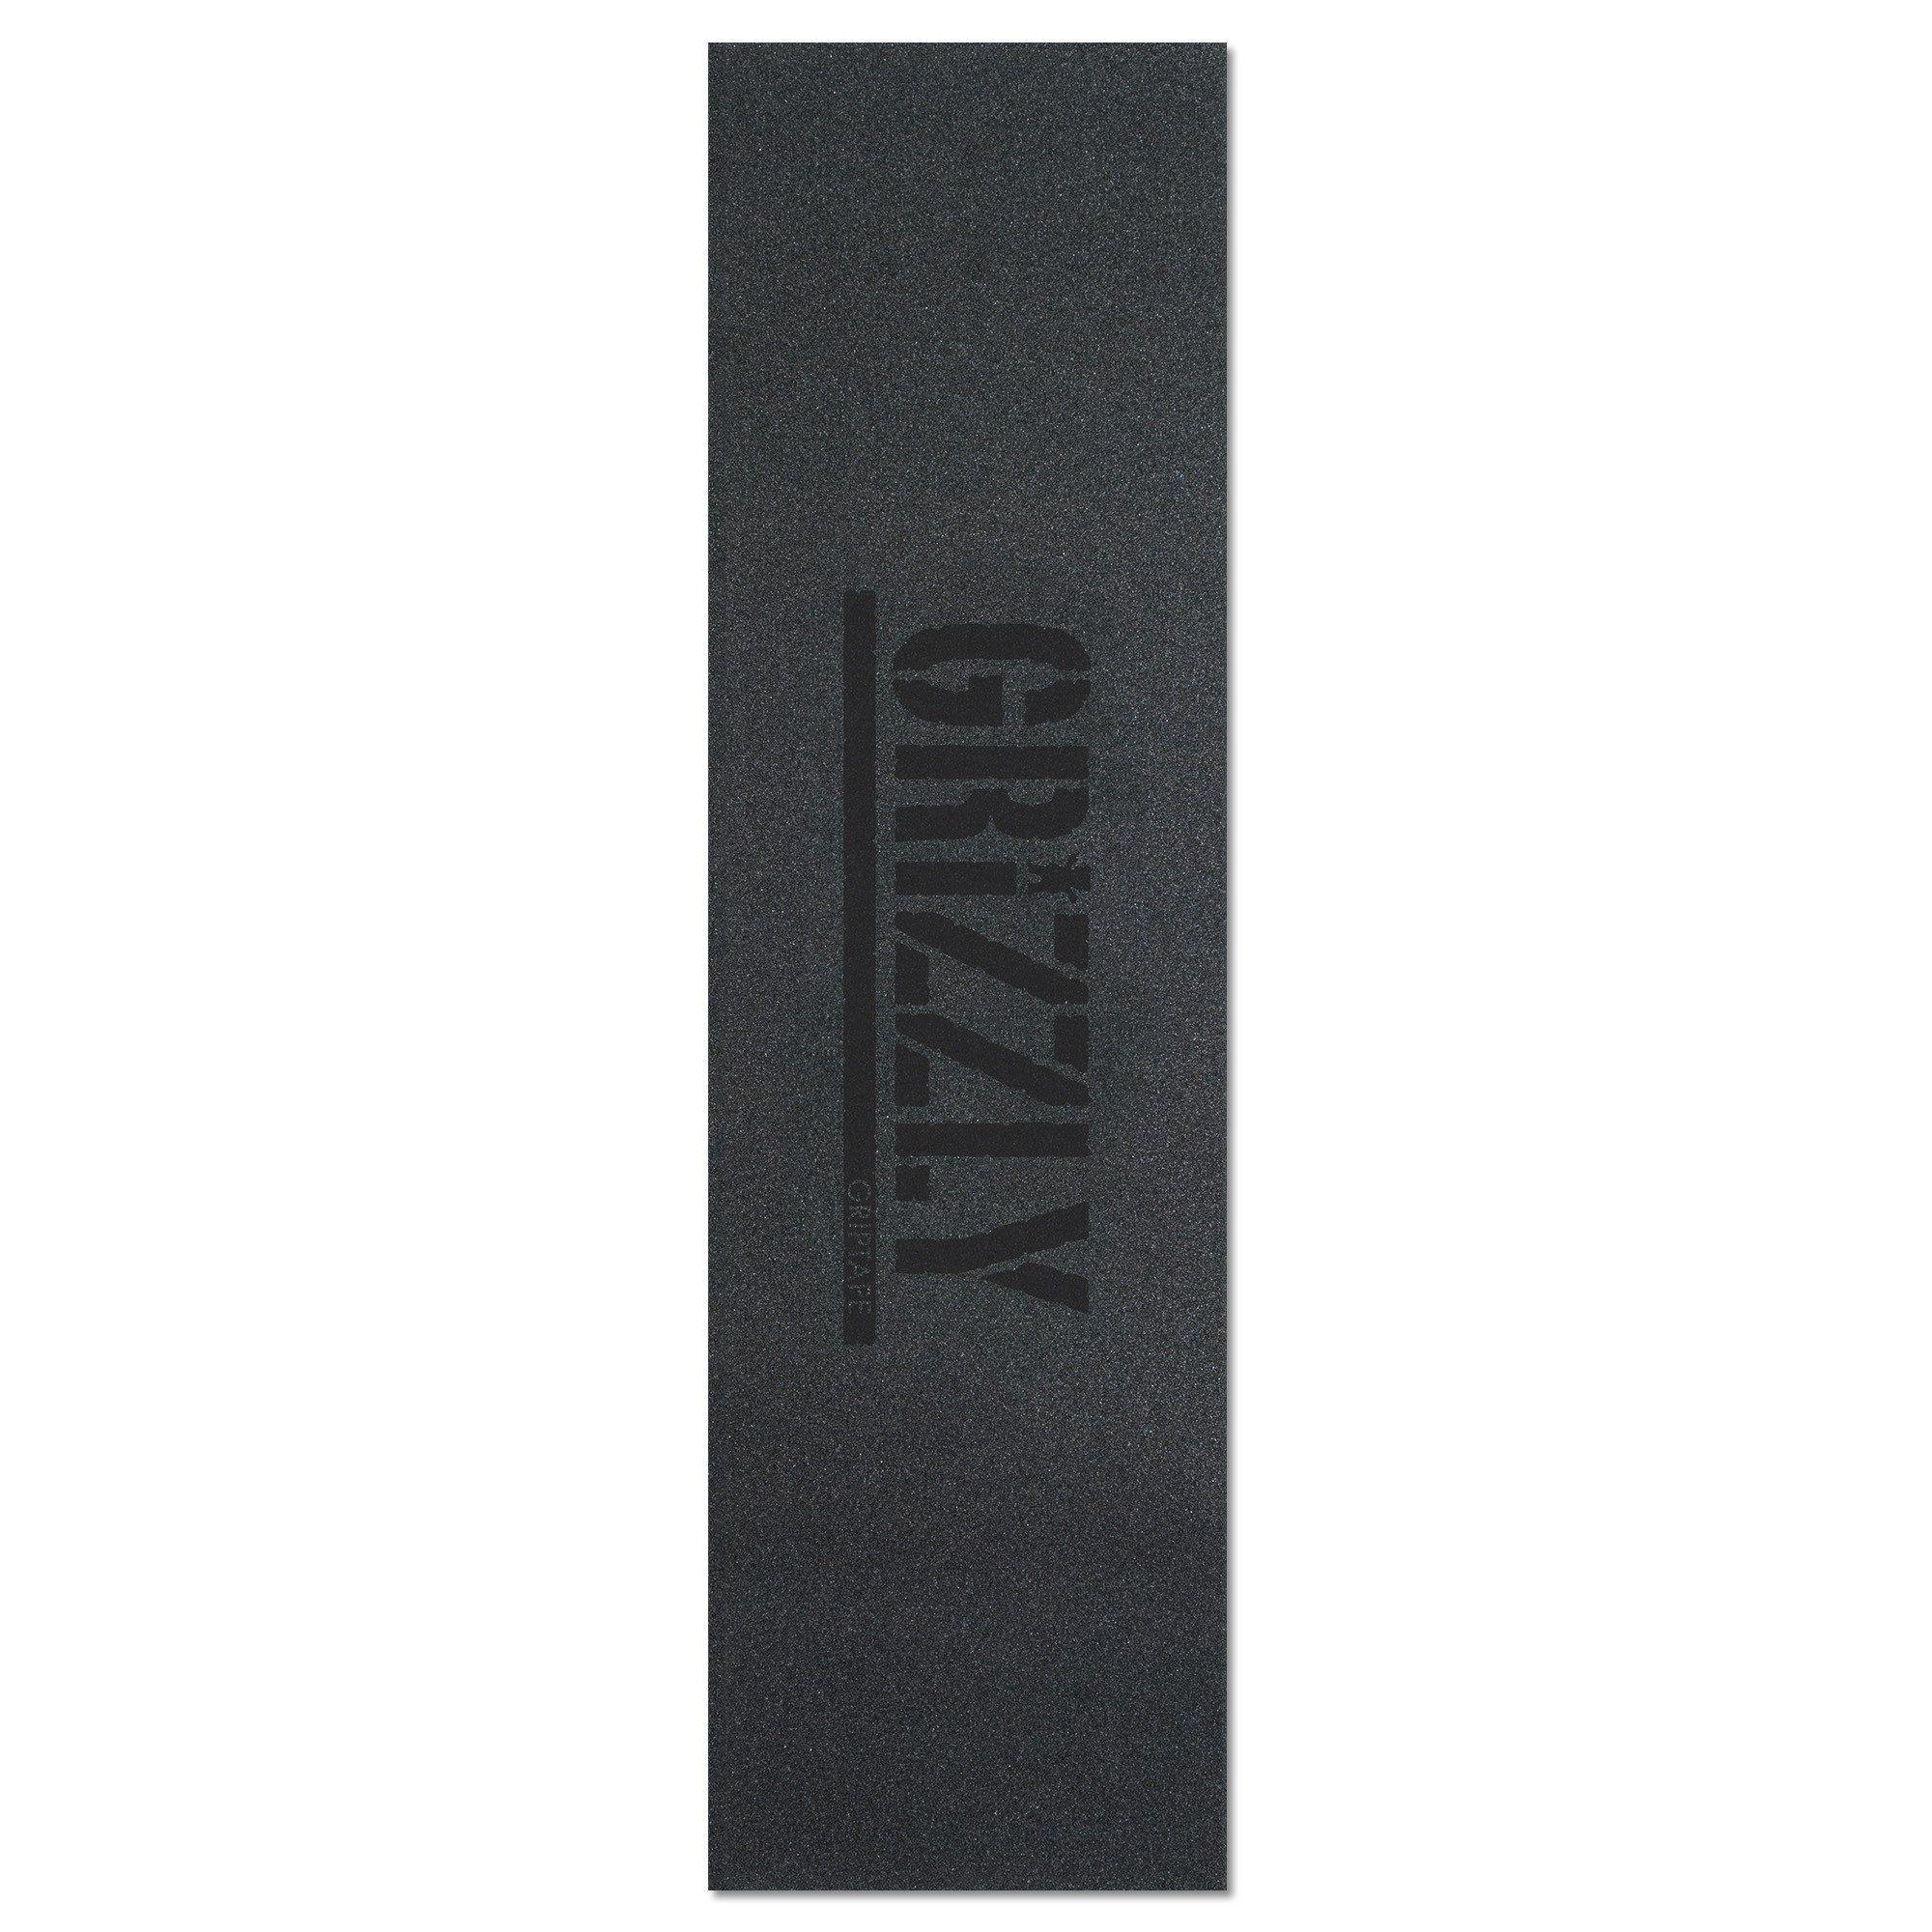 Grizzly Print Logo - Stamp Print Griptape - Black - Grizzly Griptape